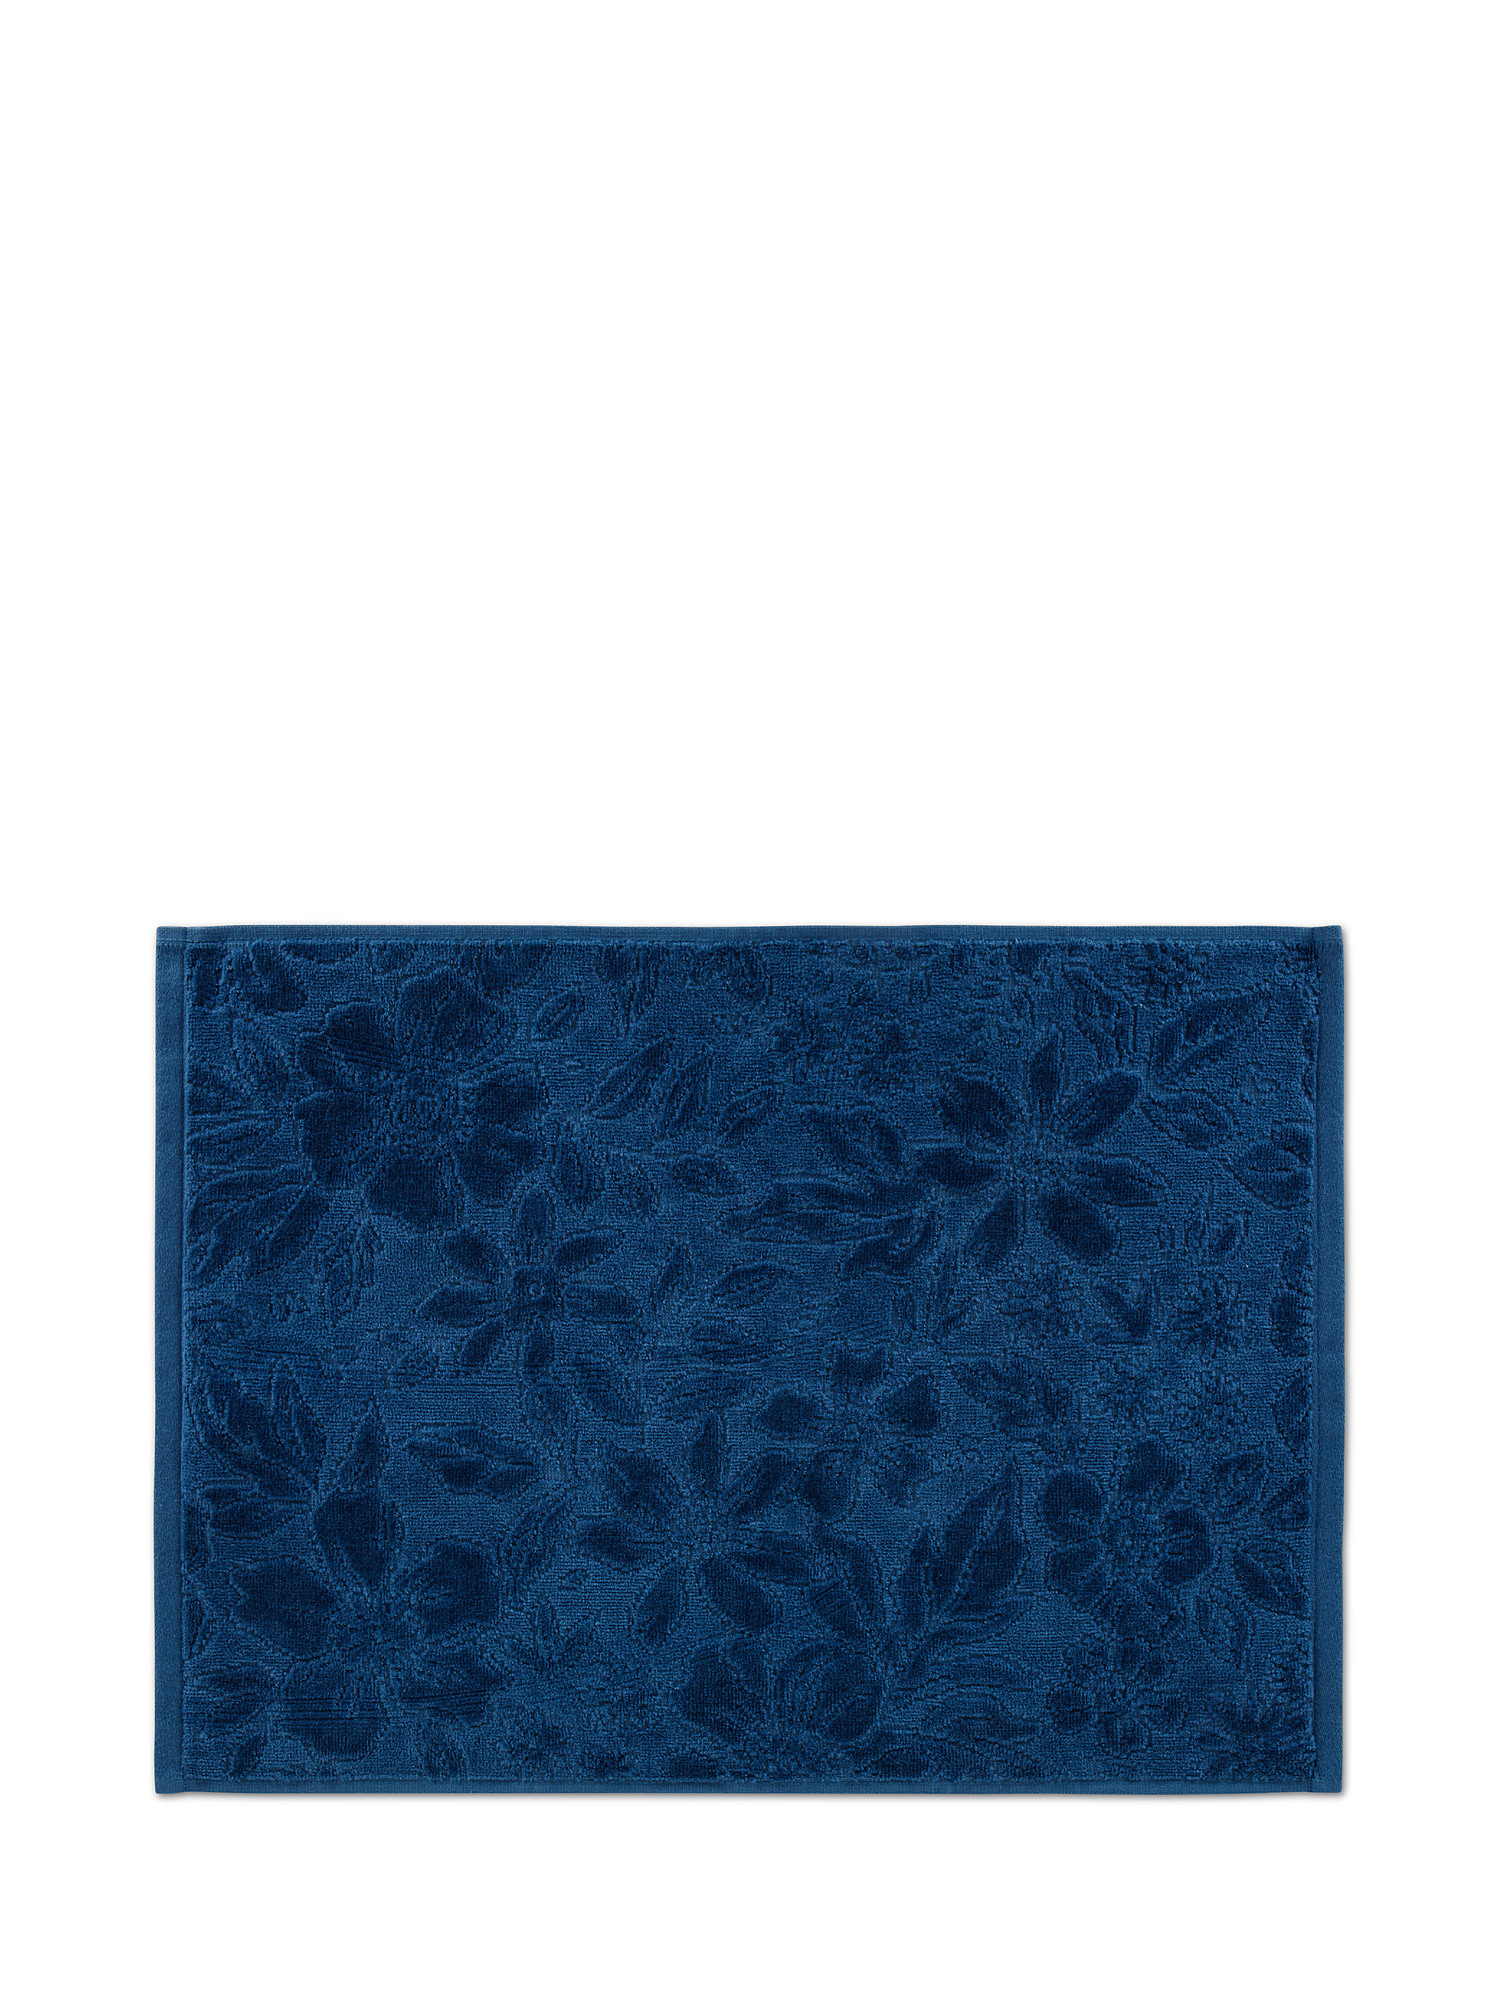 Asciugamano puro cotone lavorazione a fiori, Blu, large image number 1